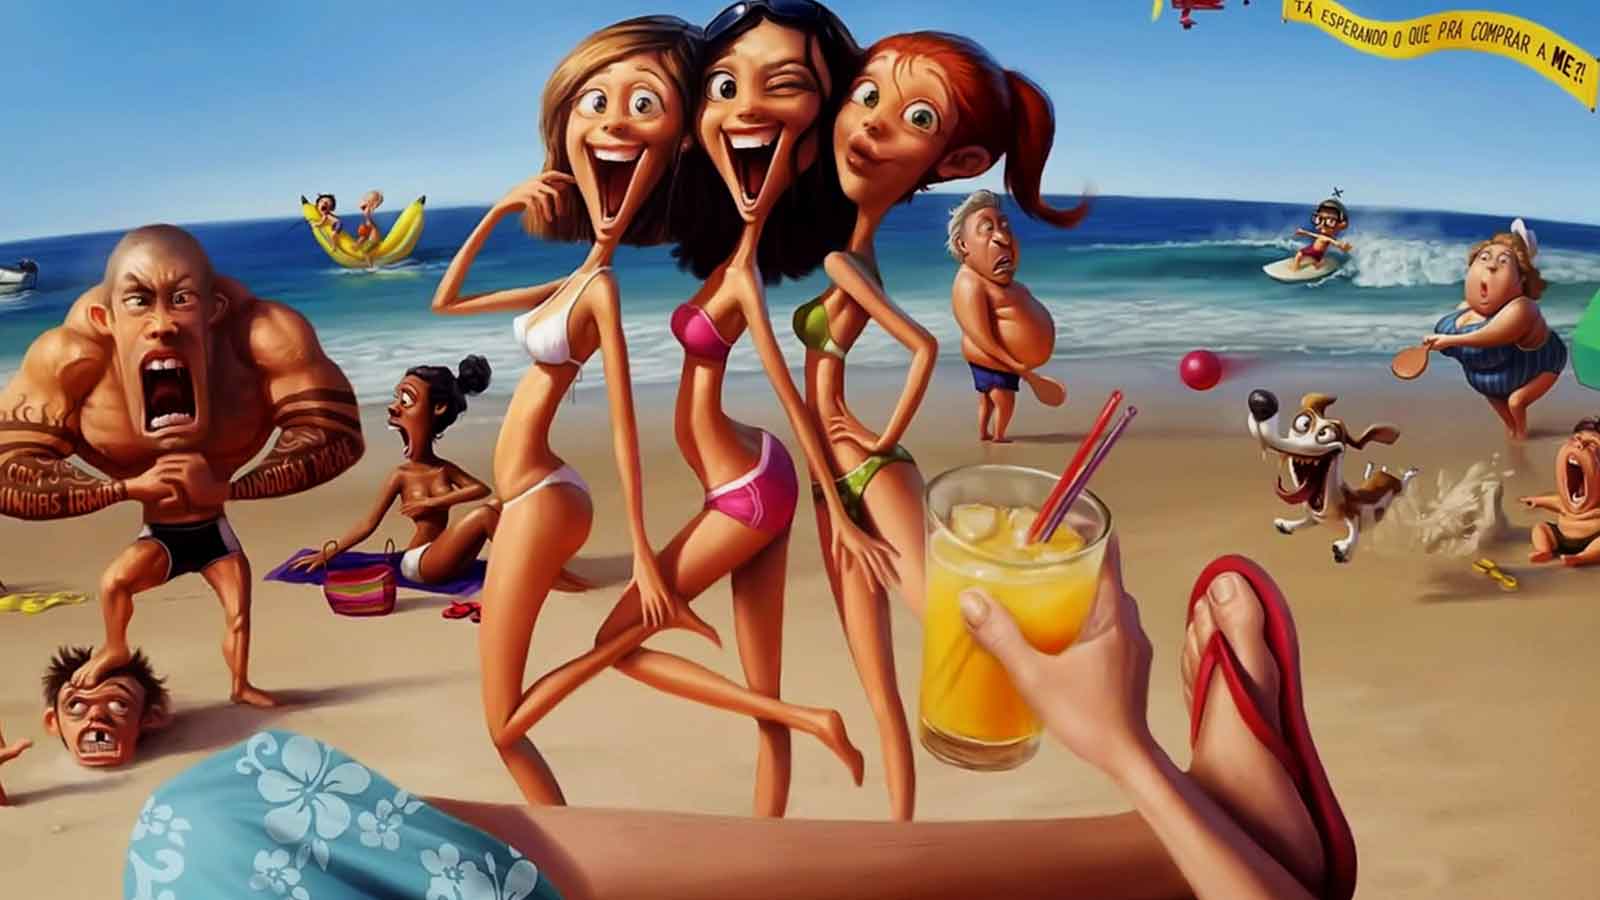 Beach Party video presentation